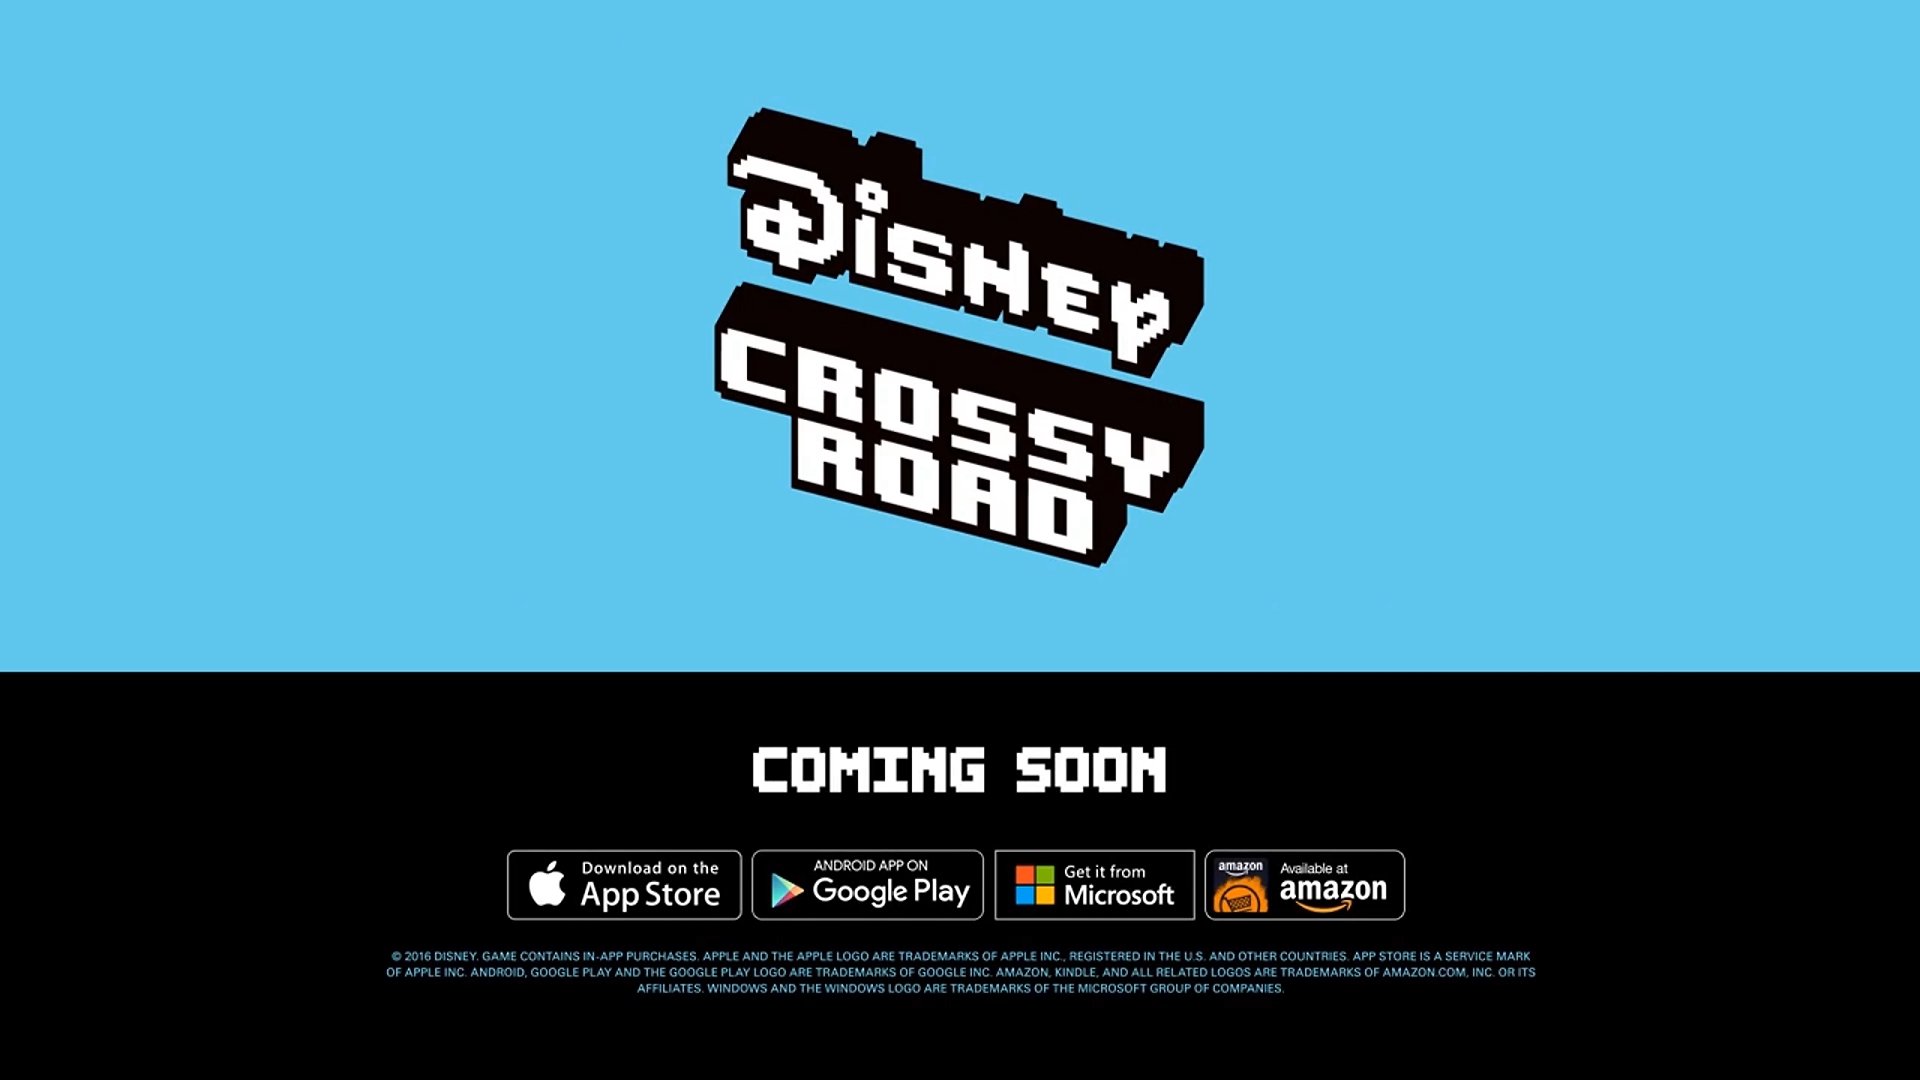 Disney's new Crossy Road game coming to Windows soon - MSPoweruser